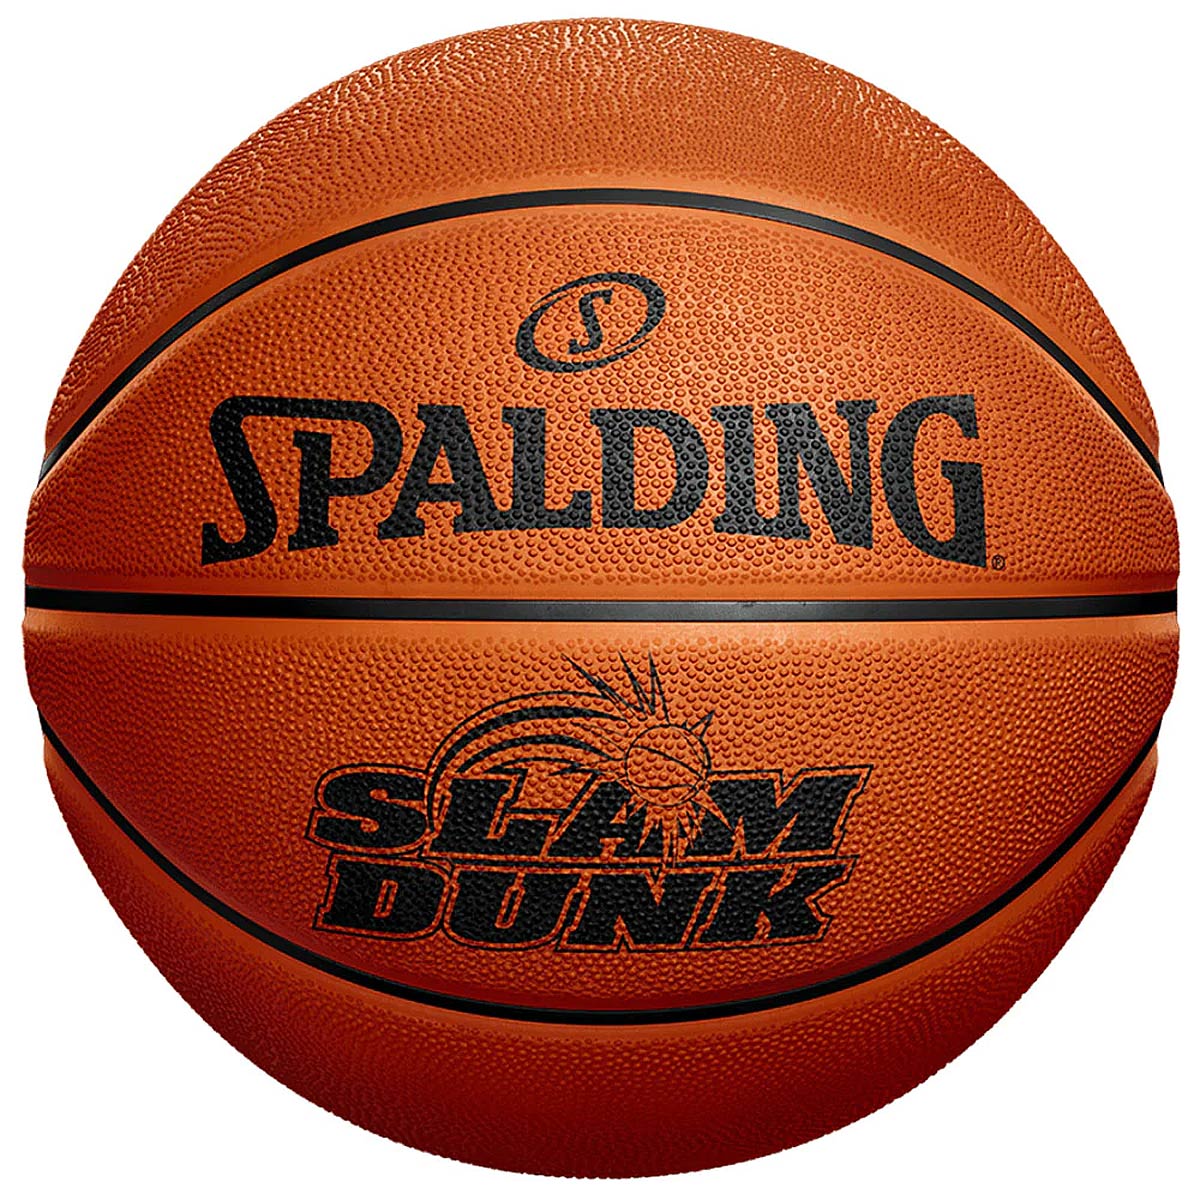 Image of Spalding Slam Dunk Sz6 Rubber Basketball, Orange